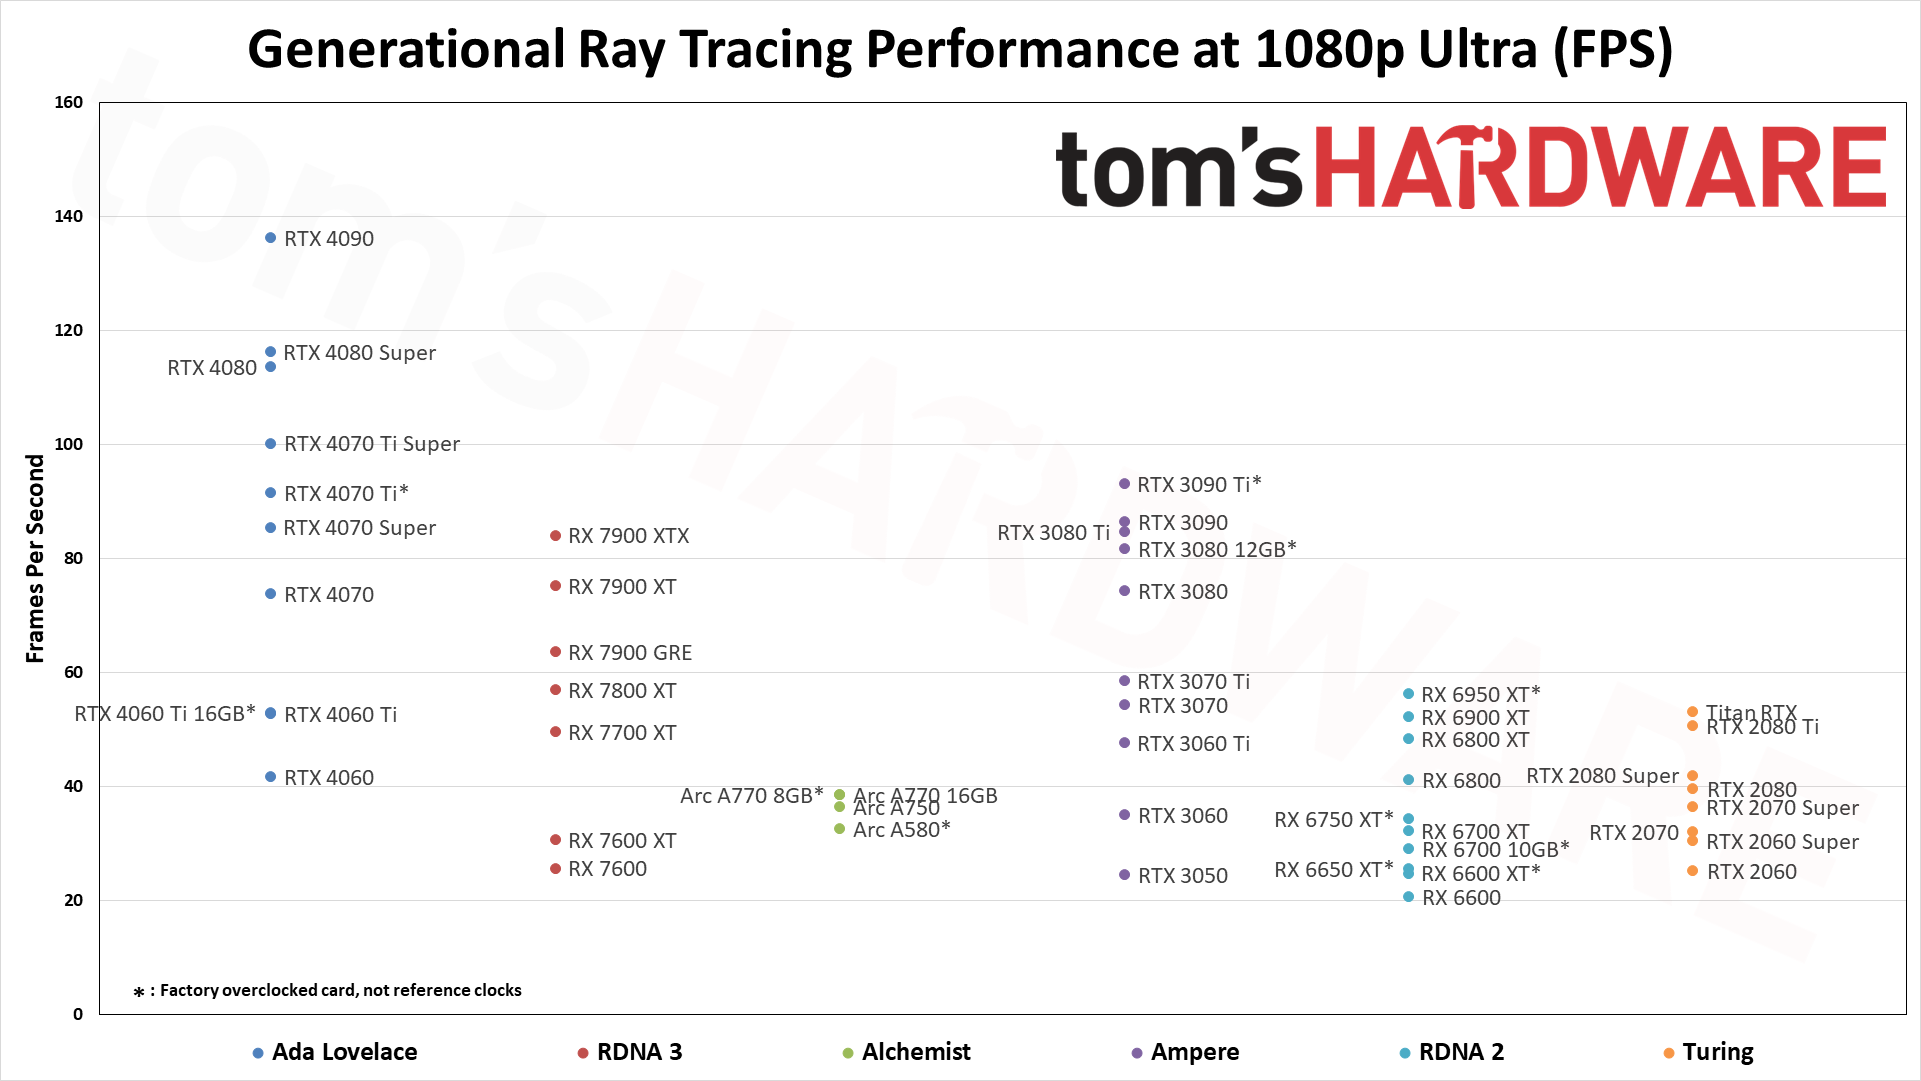 GPU benchmarks hierarchy charts